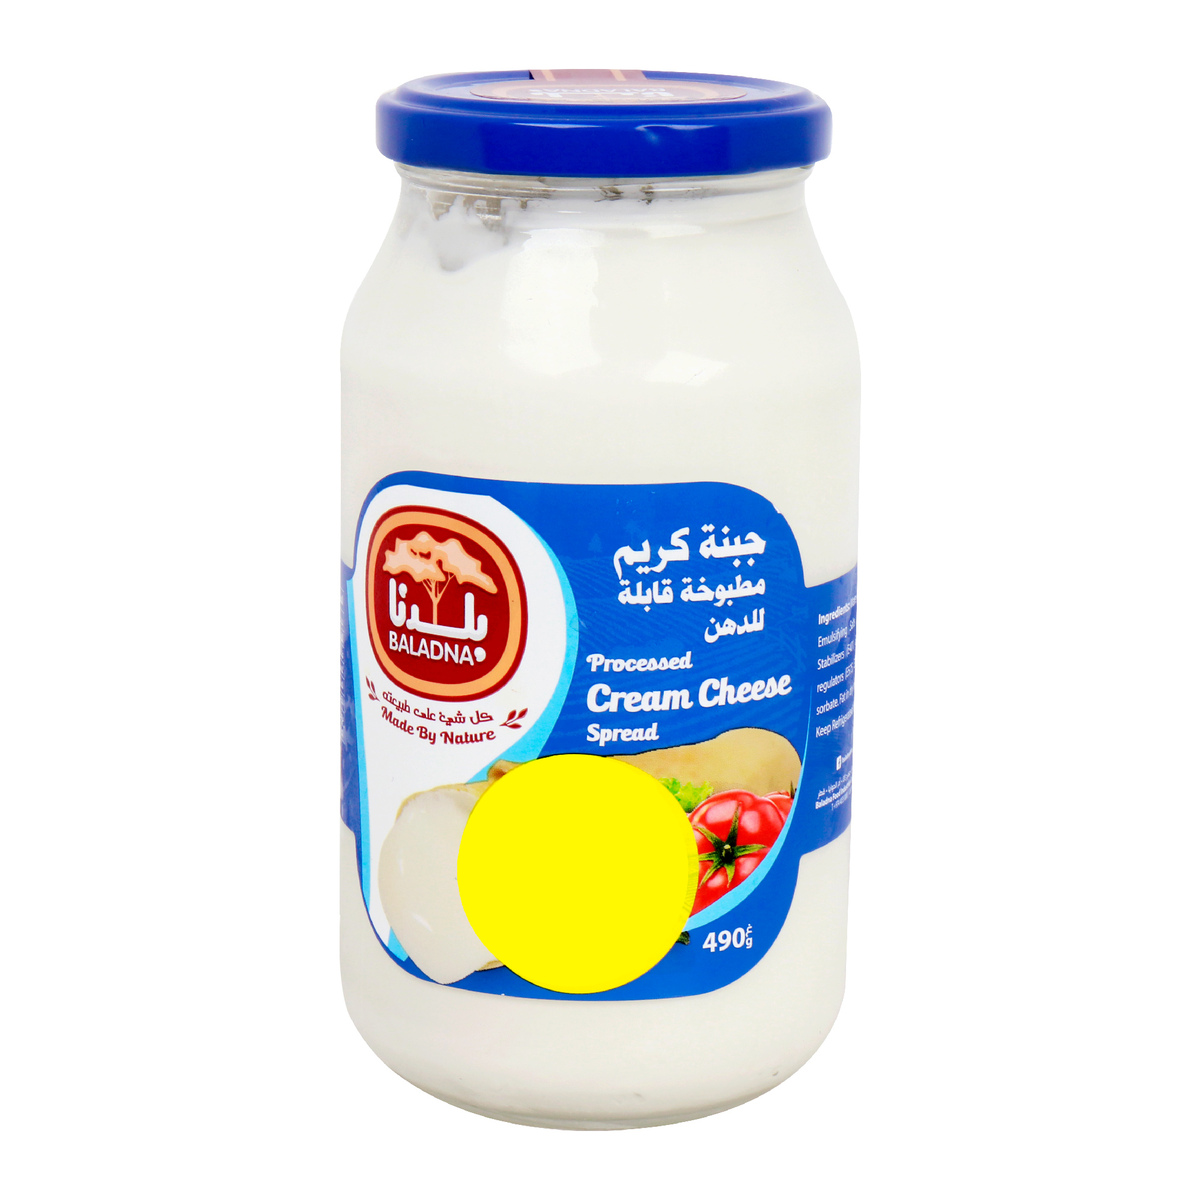 Baladna Processed Cream Cheese Spread 490g